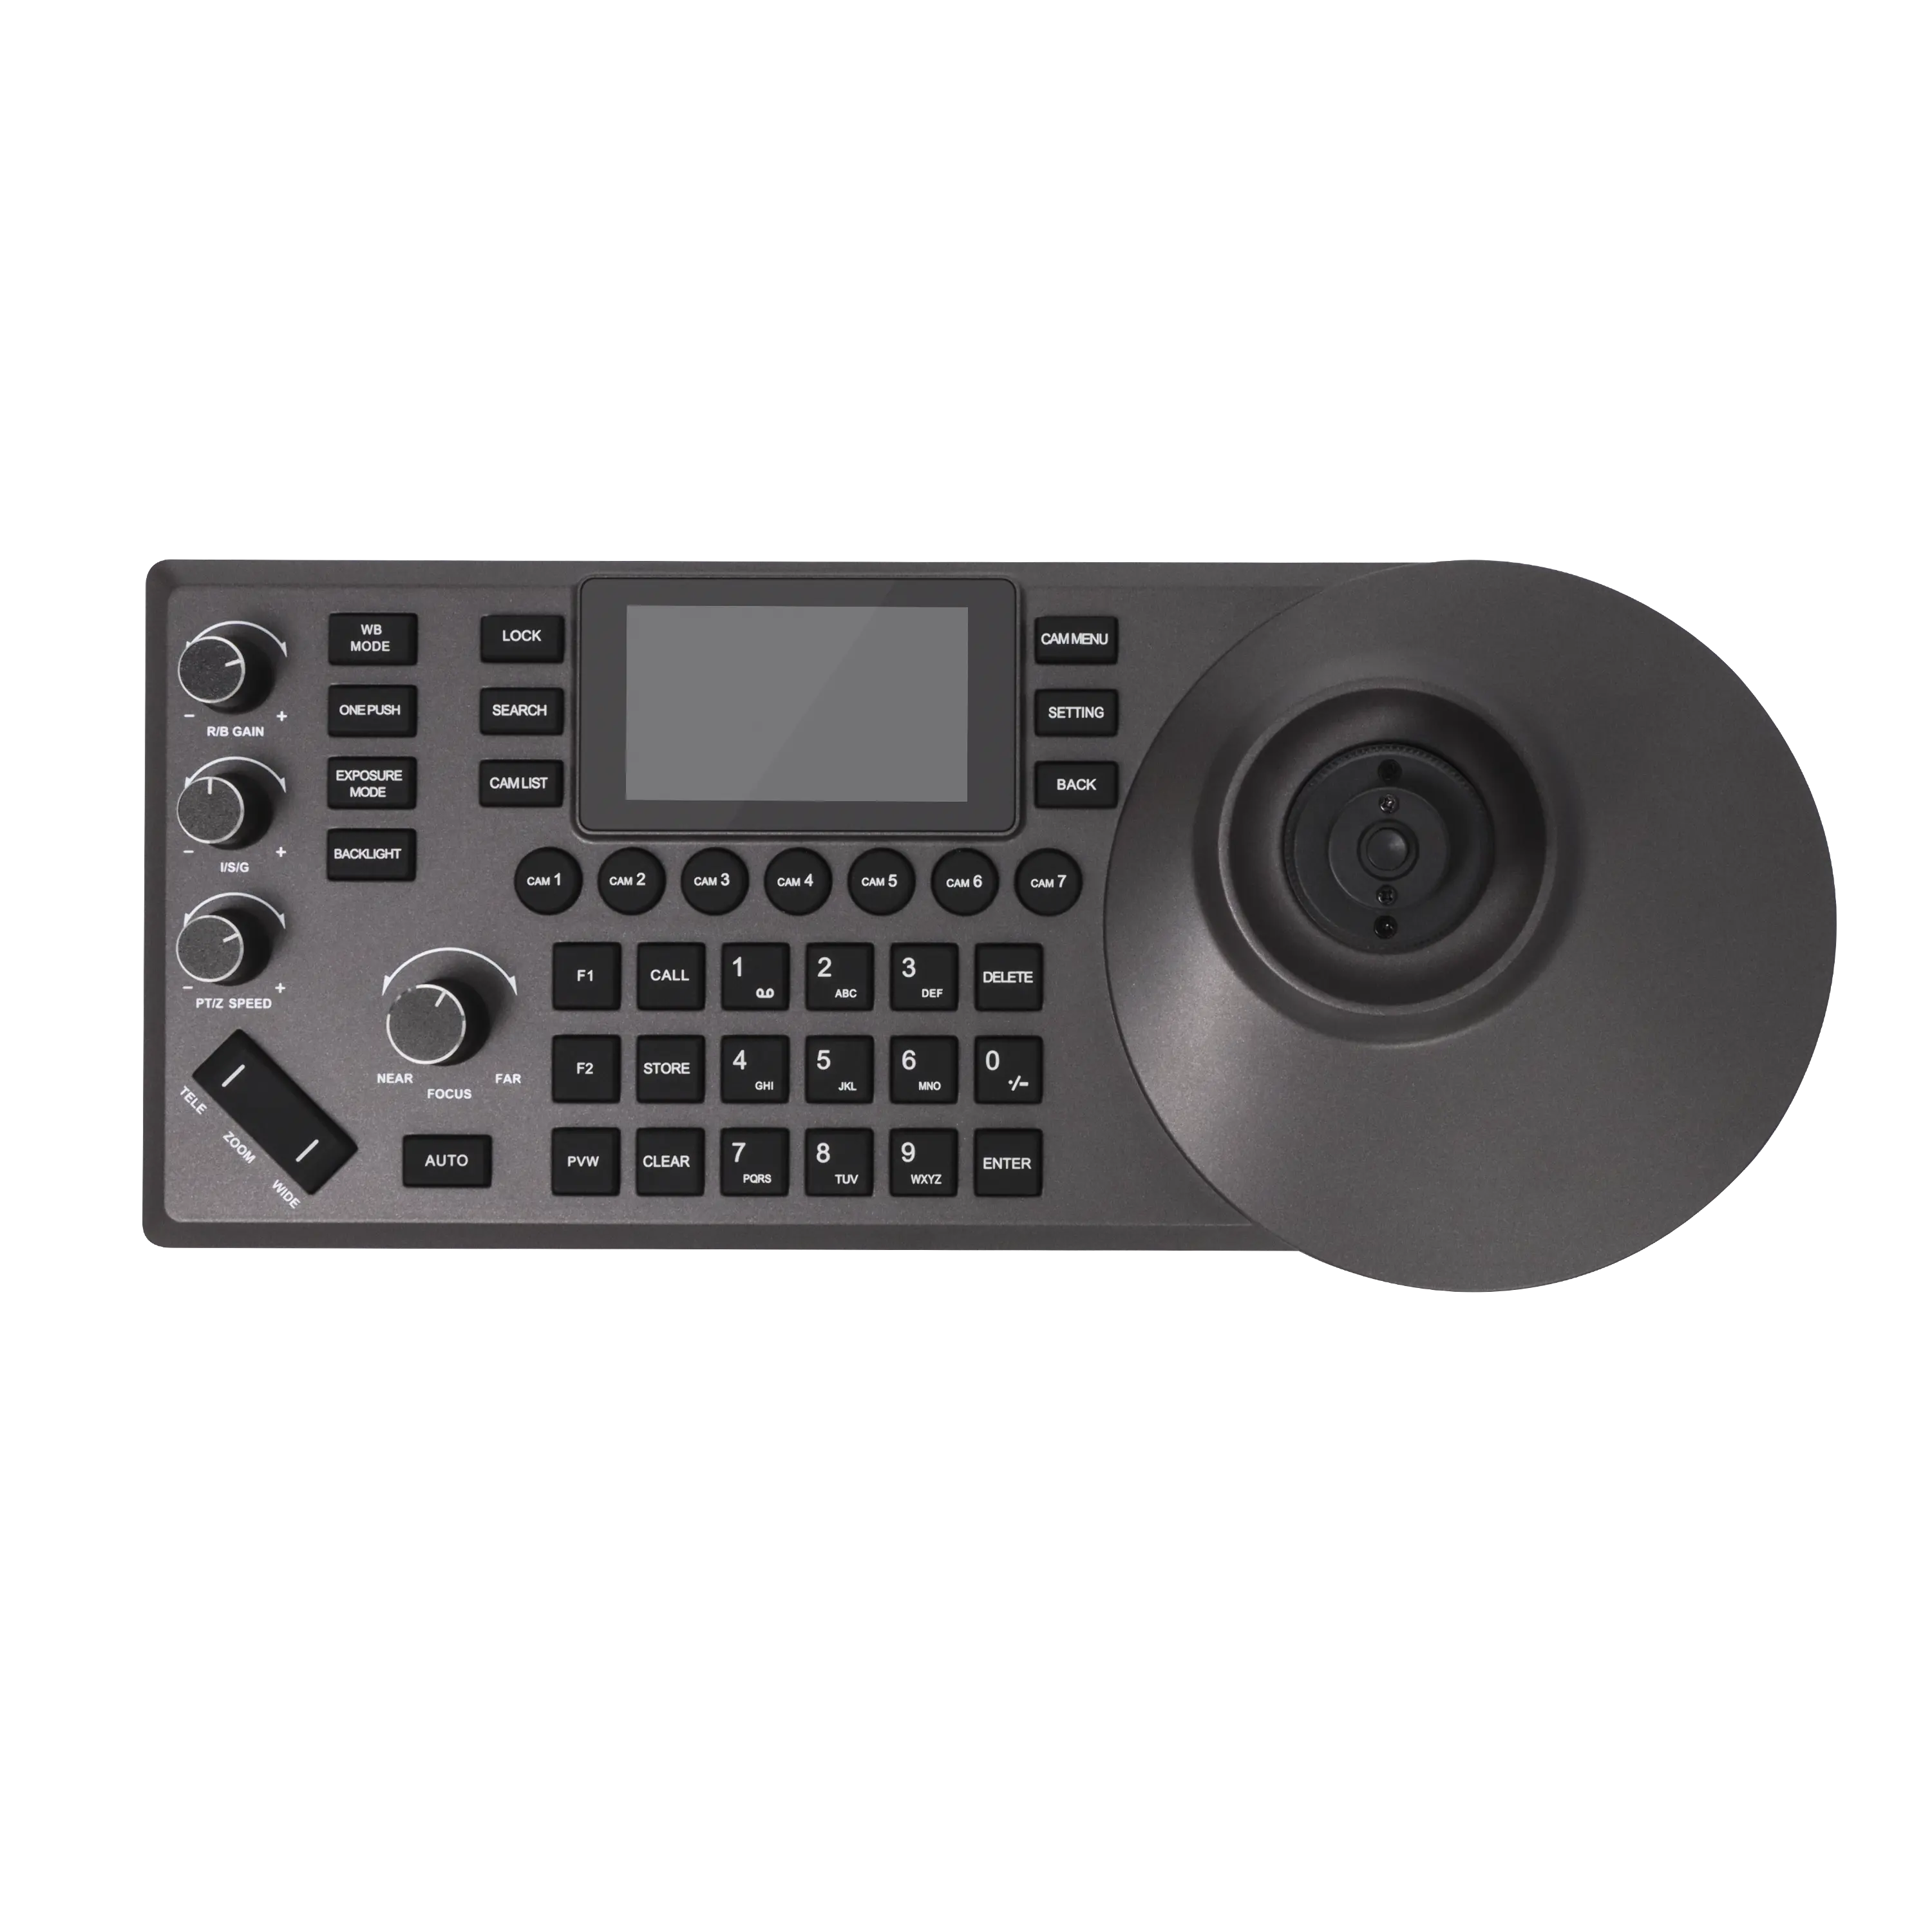 HDKATOV 4D ndi controller for live events broadcasting livestream equipment IP usb controller ndi ptz camera control